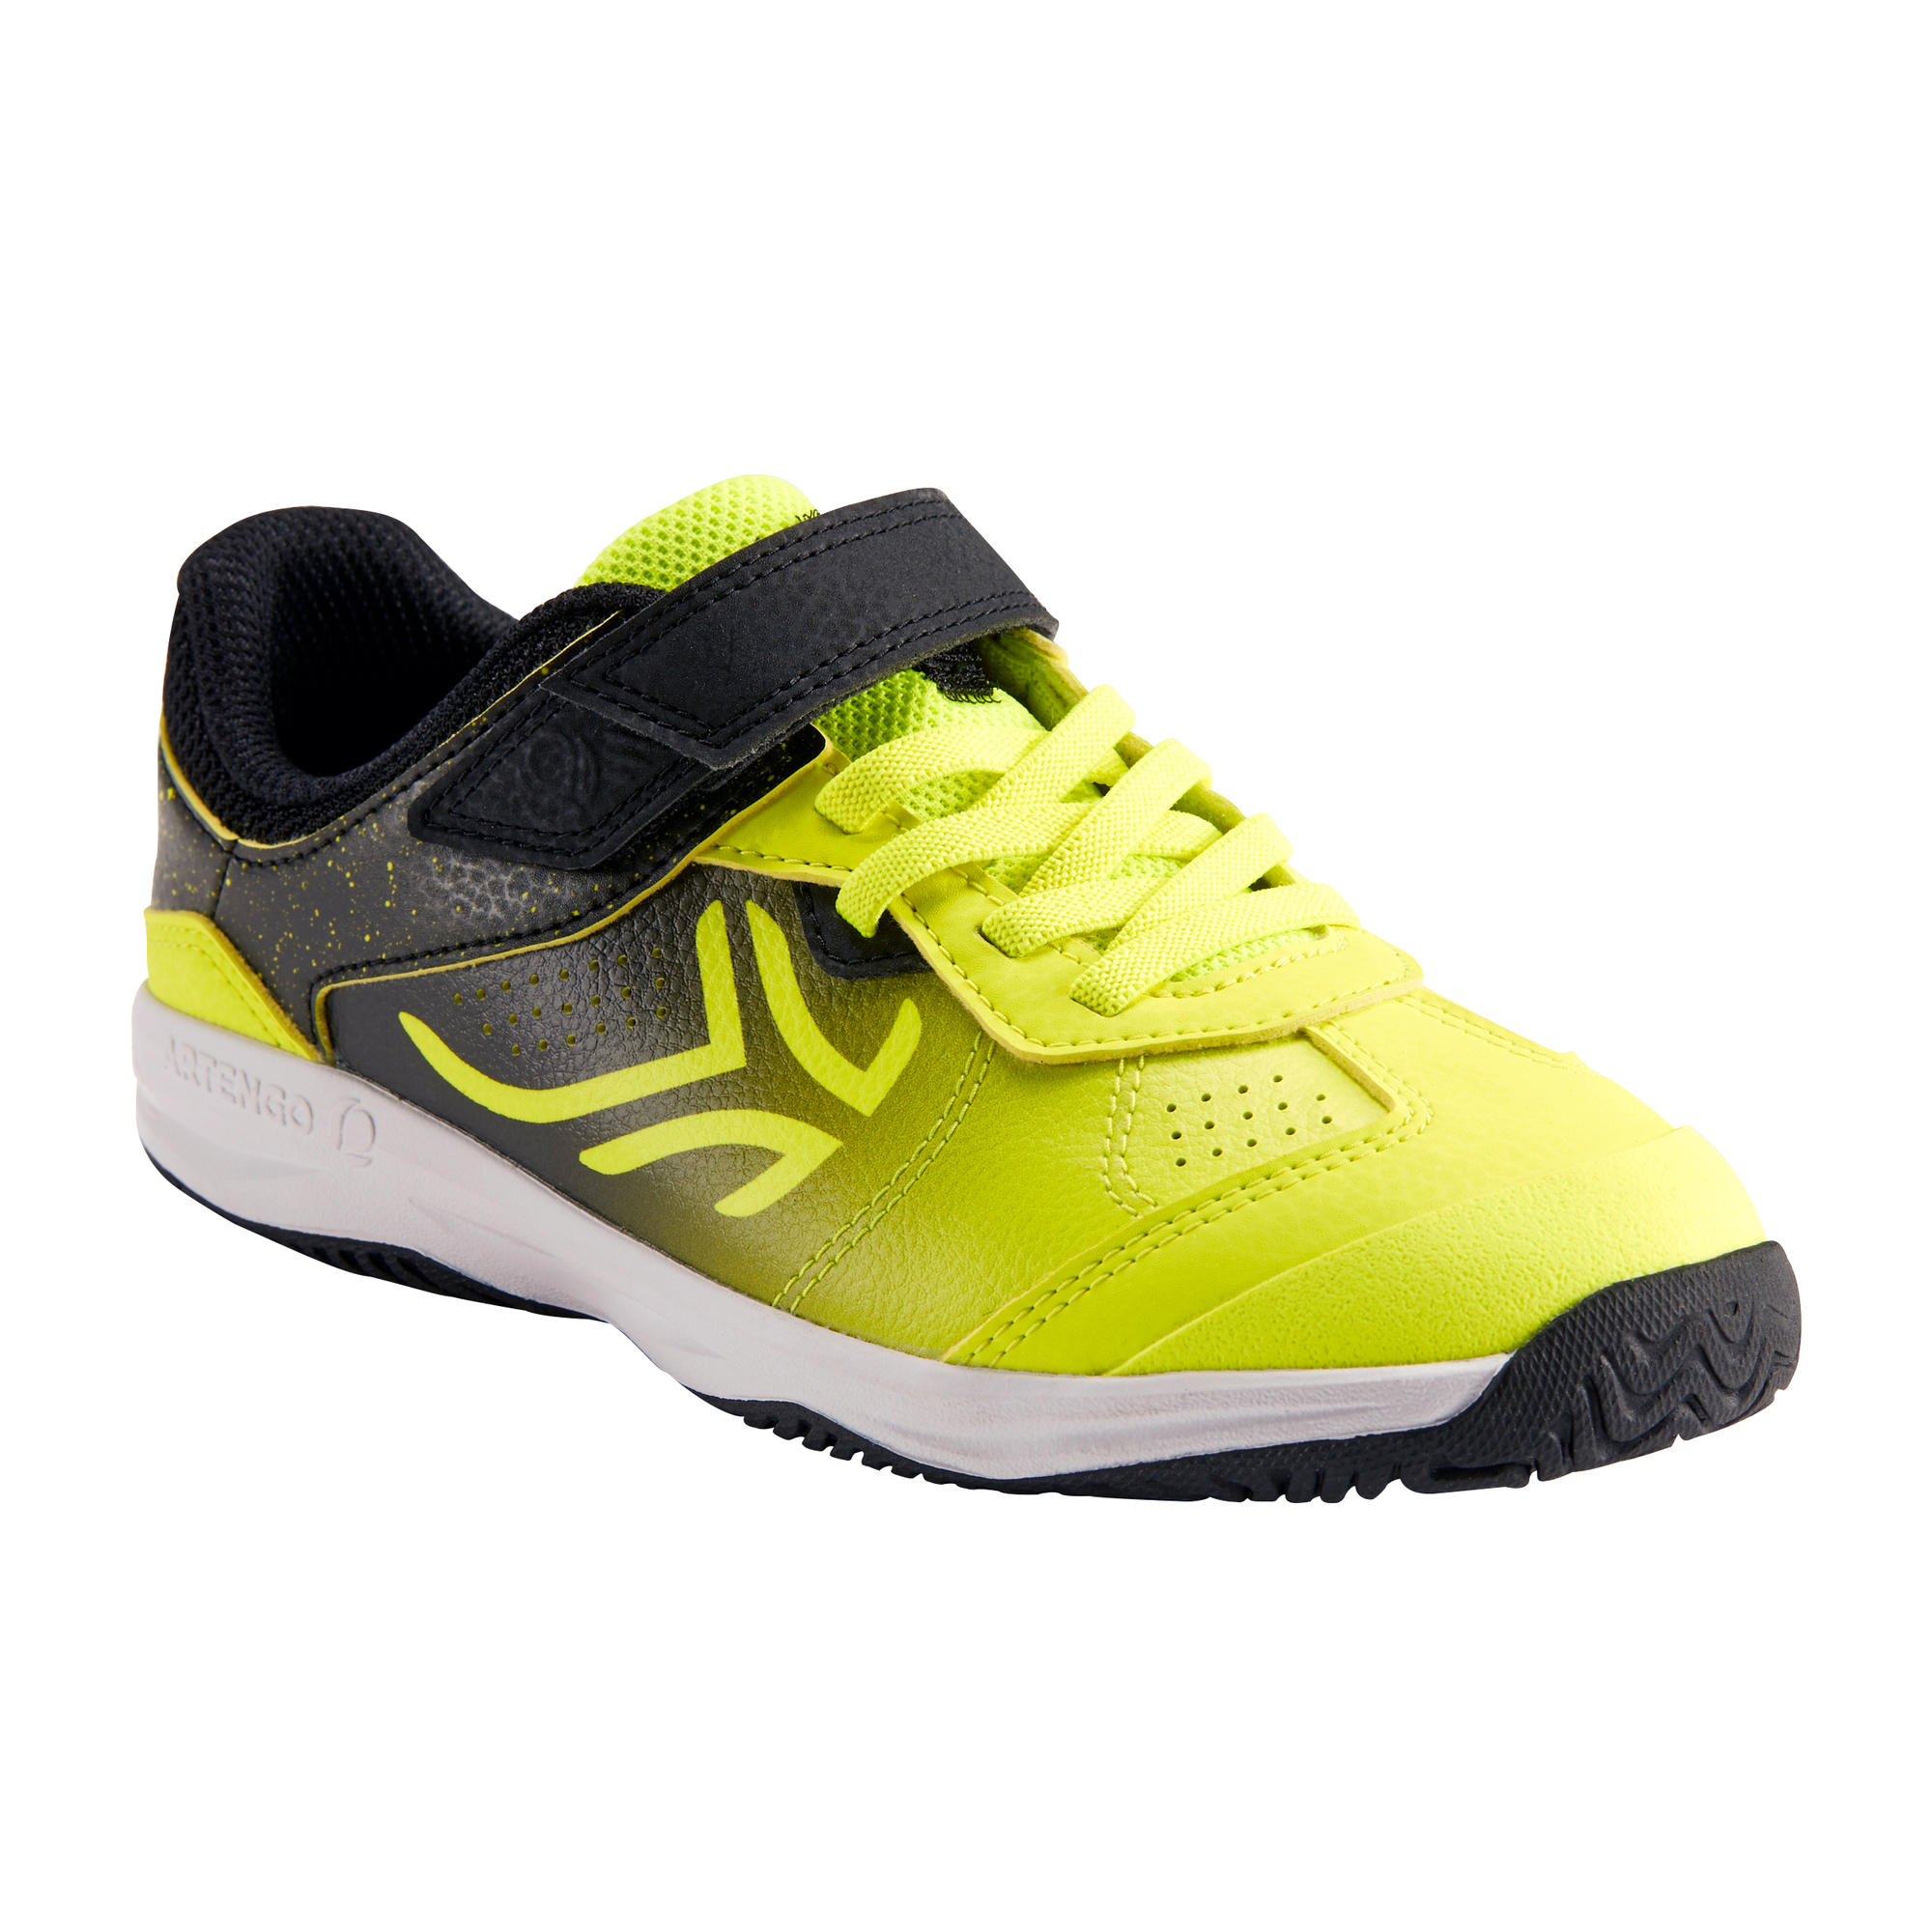 kids yellow tennis shoes